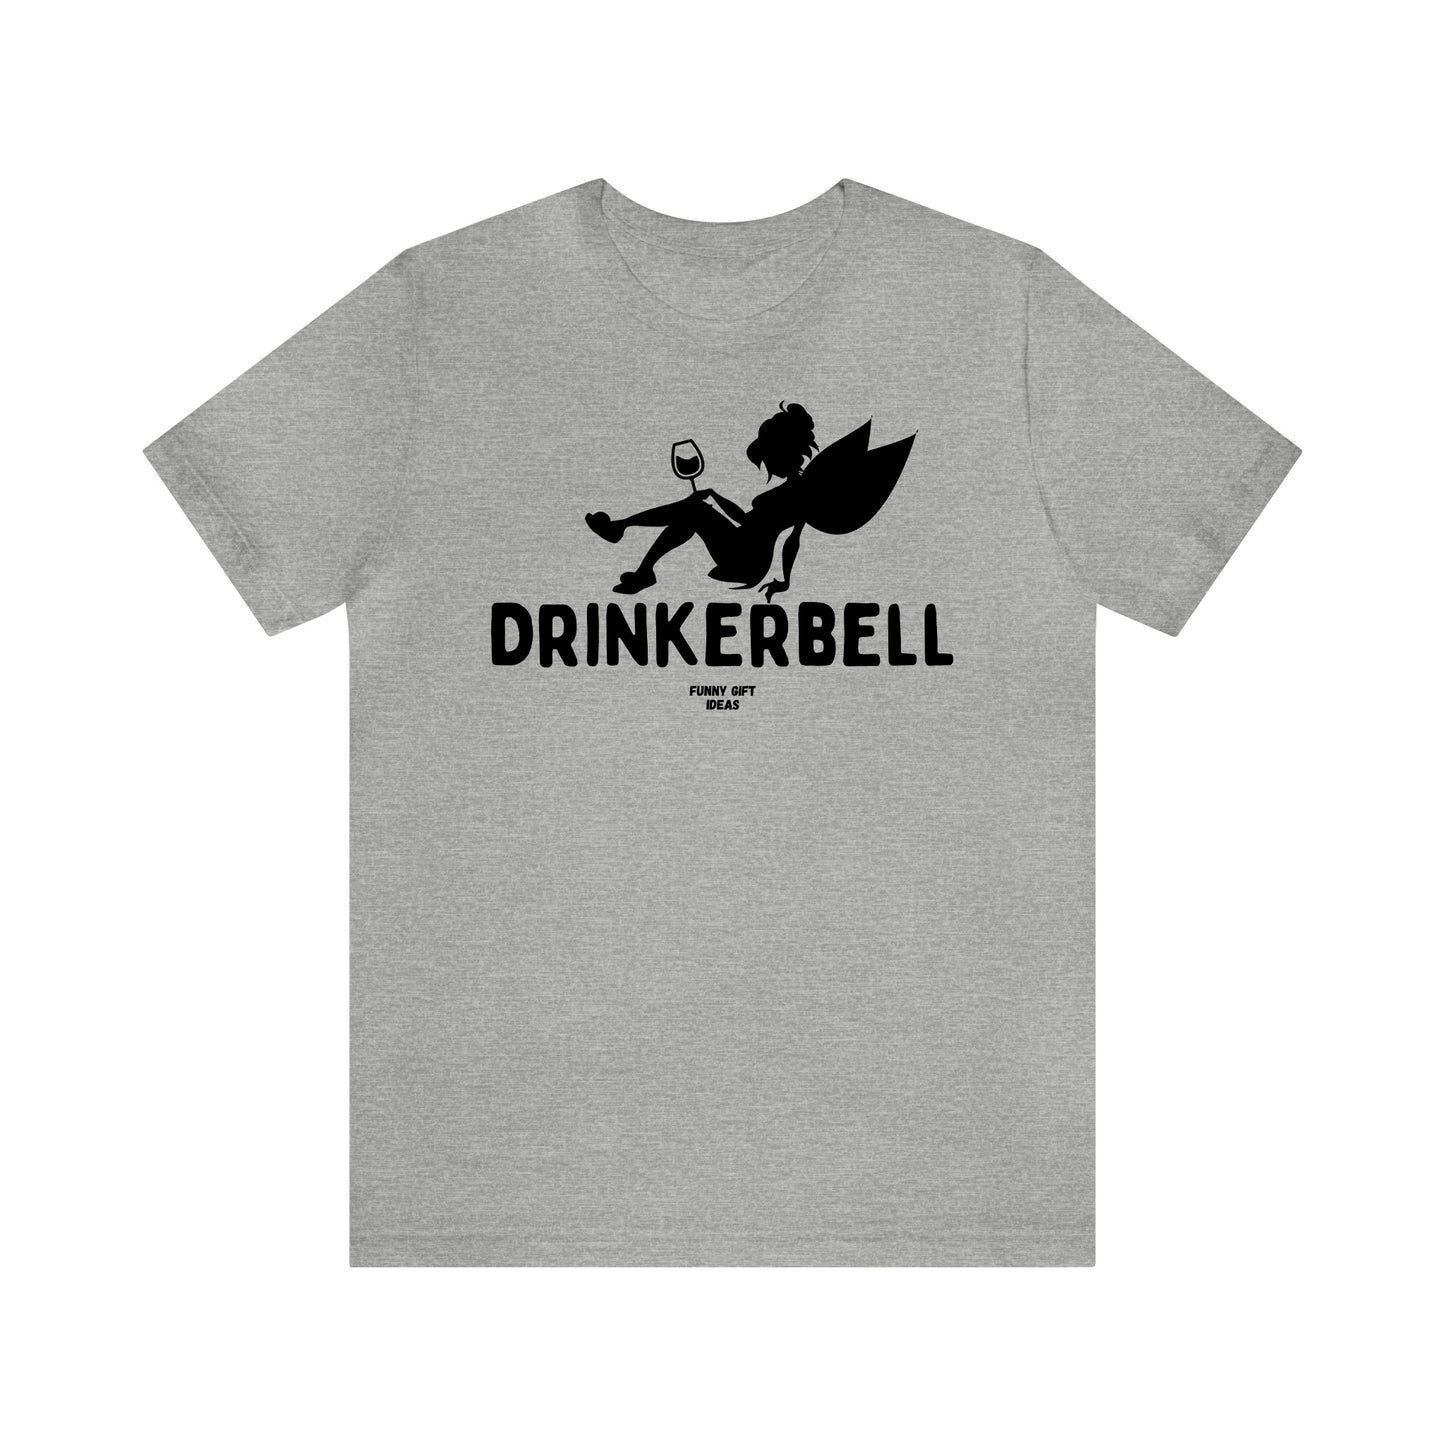 Funny Shirts for Women - Drinkerbell - Women's T Shirts